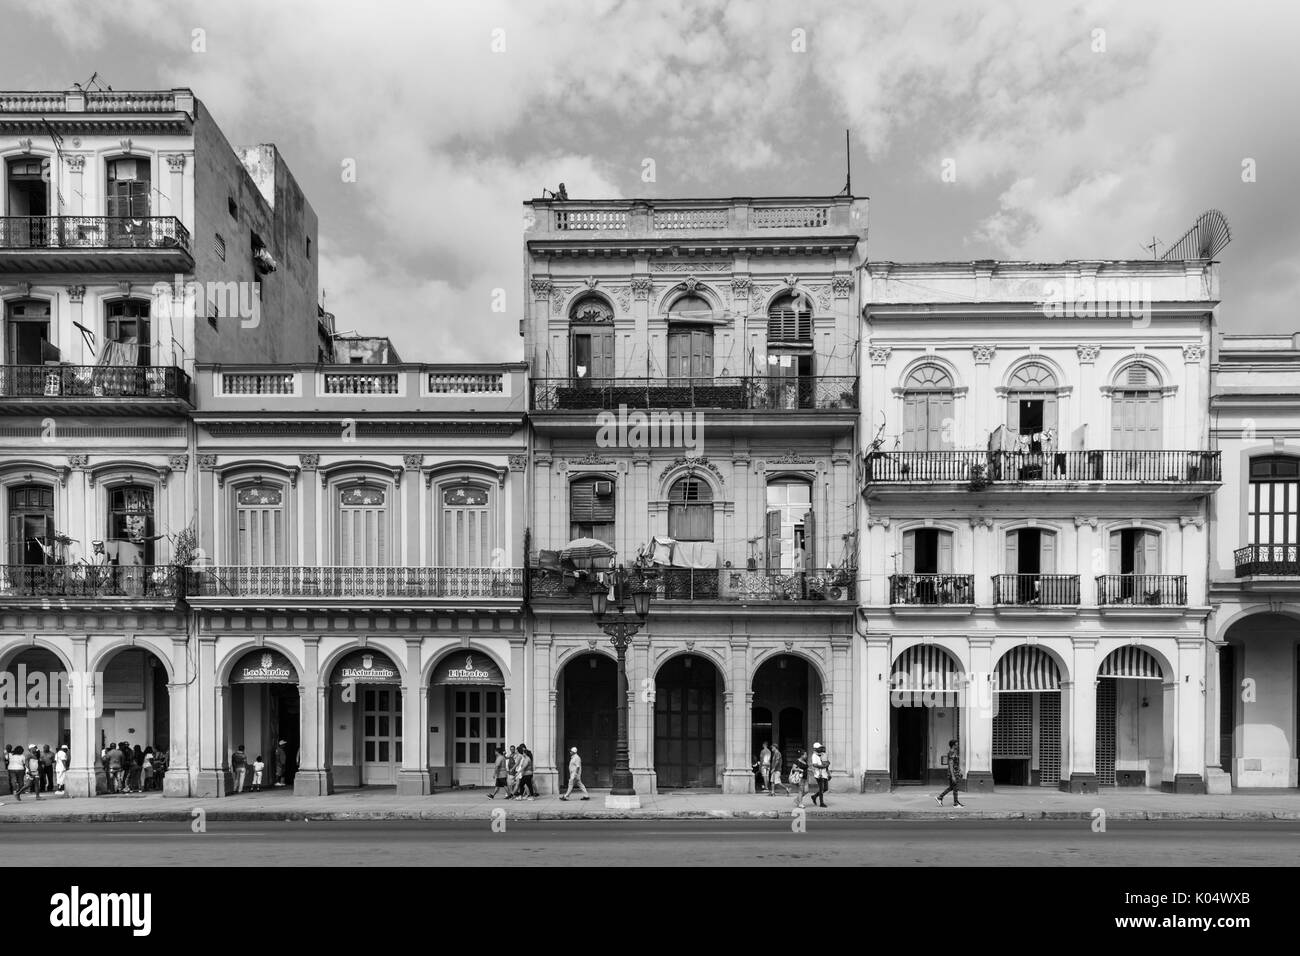 Historic buildings, typical colourful architecture and people in Paseo de Marti, monochrome, La Habana  Vieja, Old Havana, Cuba Stock Photo